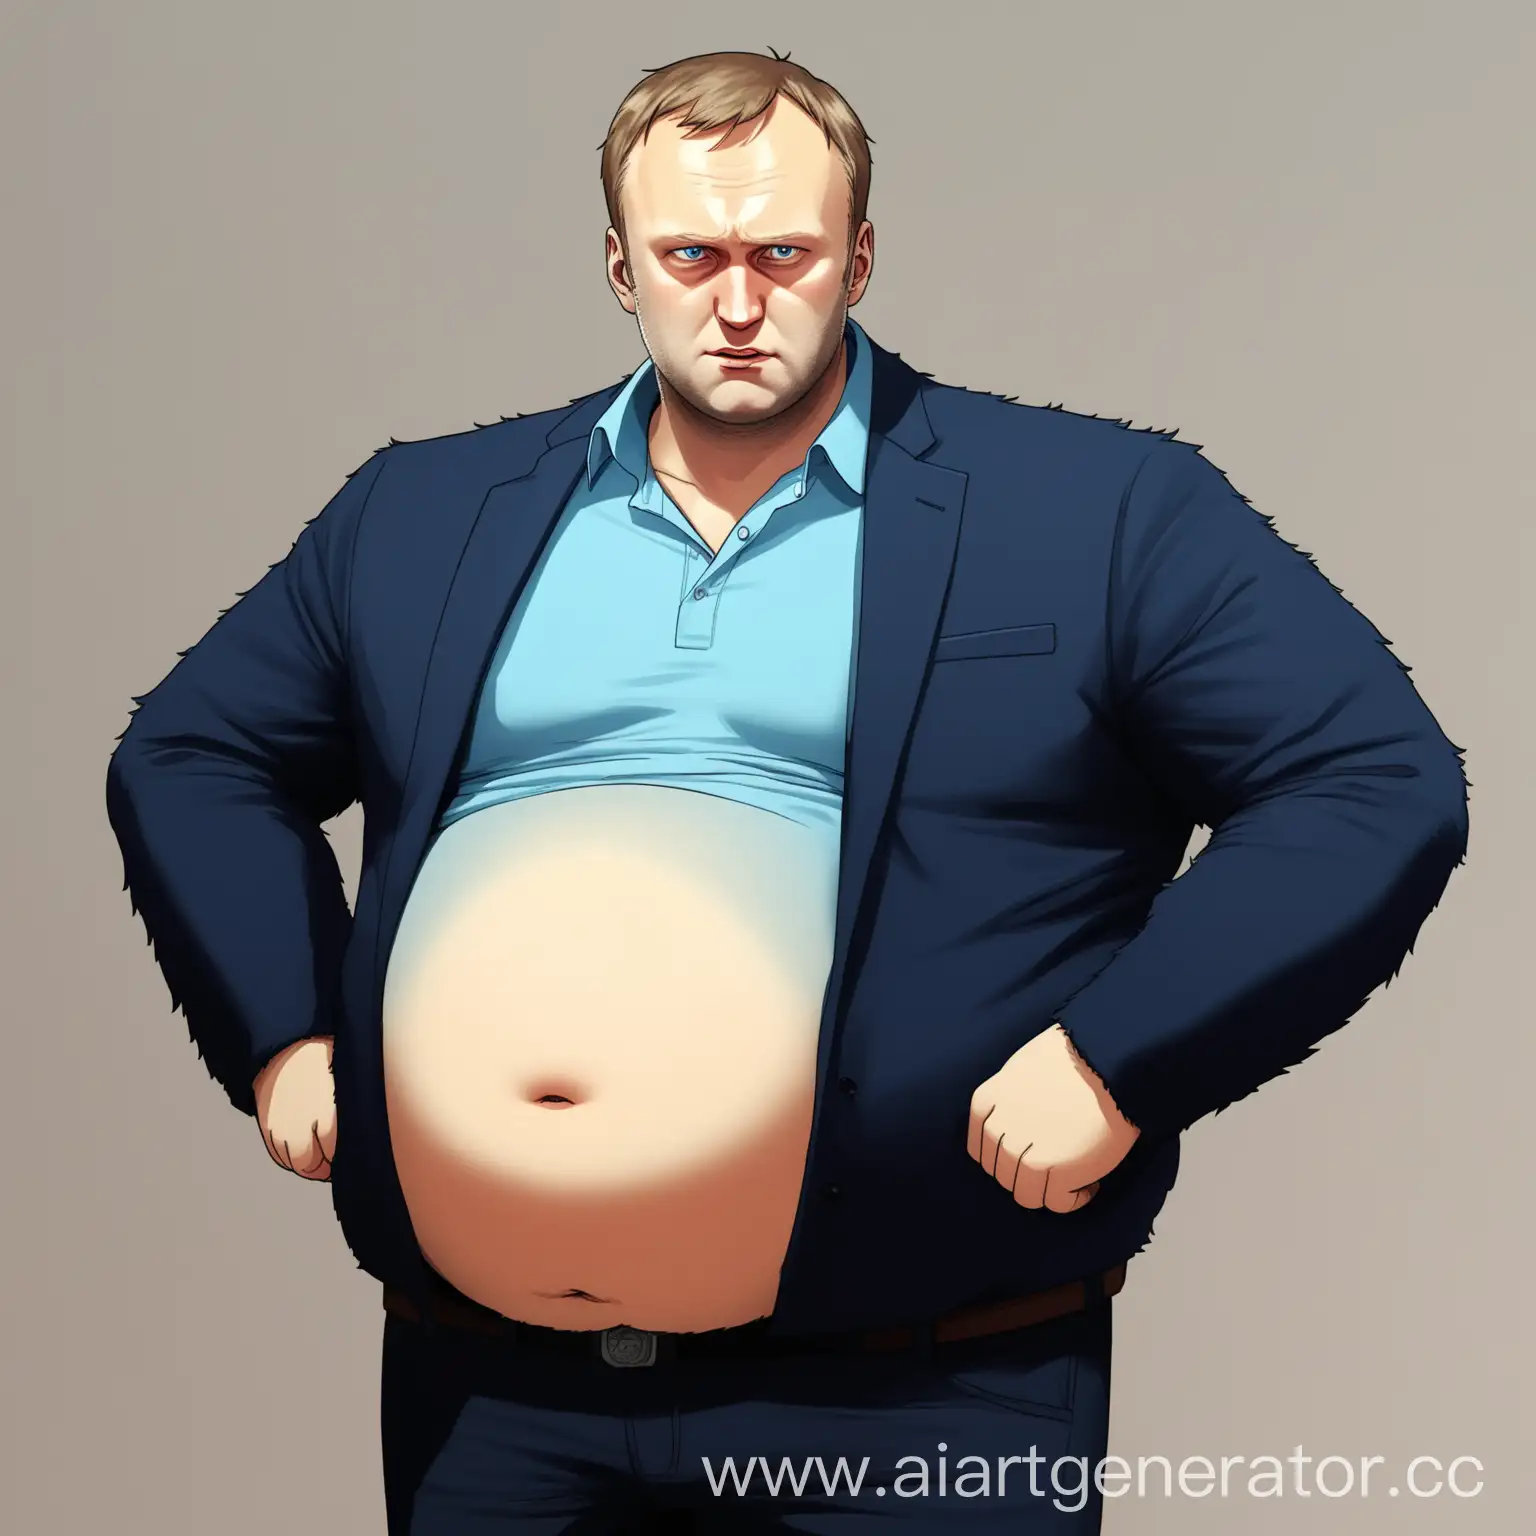 Political-Activist-Alexei-Navalny-as-a-Portly-Anthropomorphic-Creature